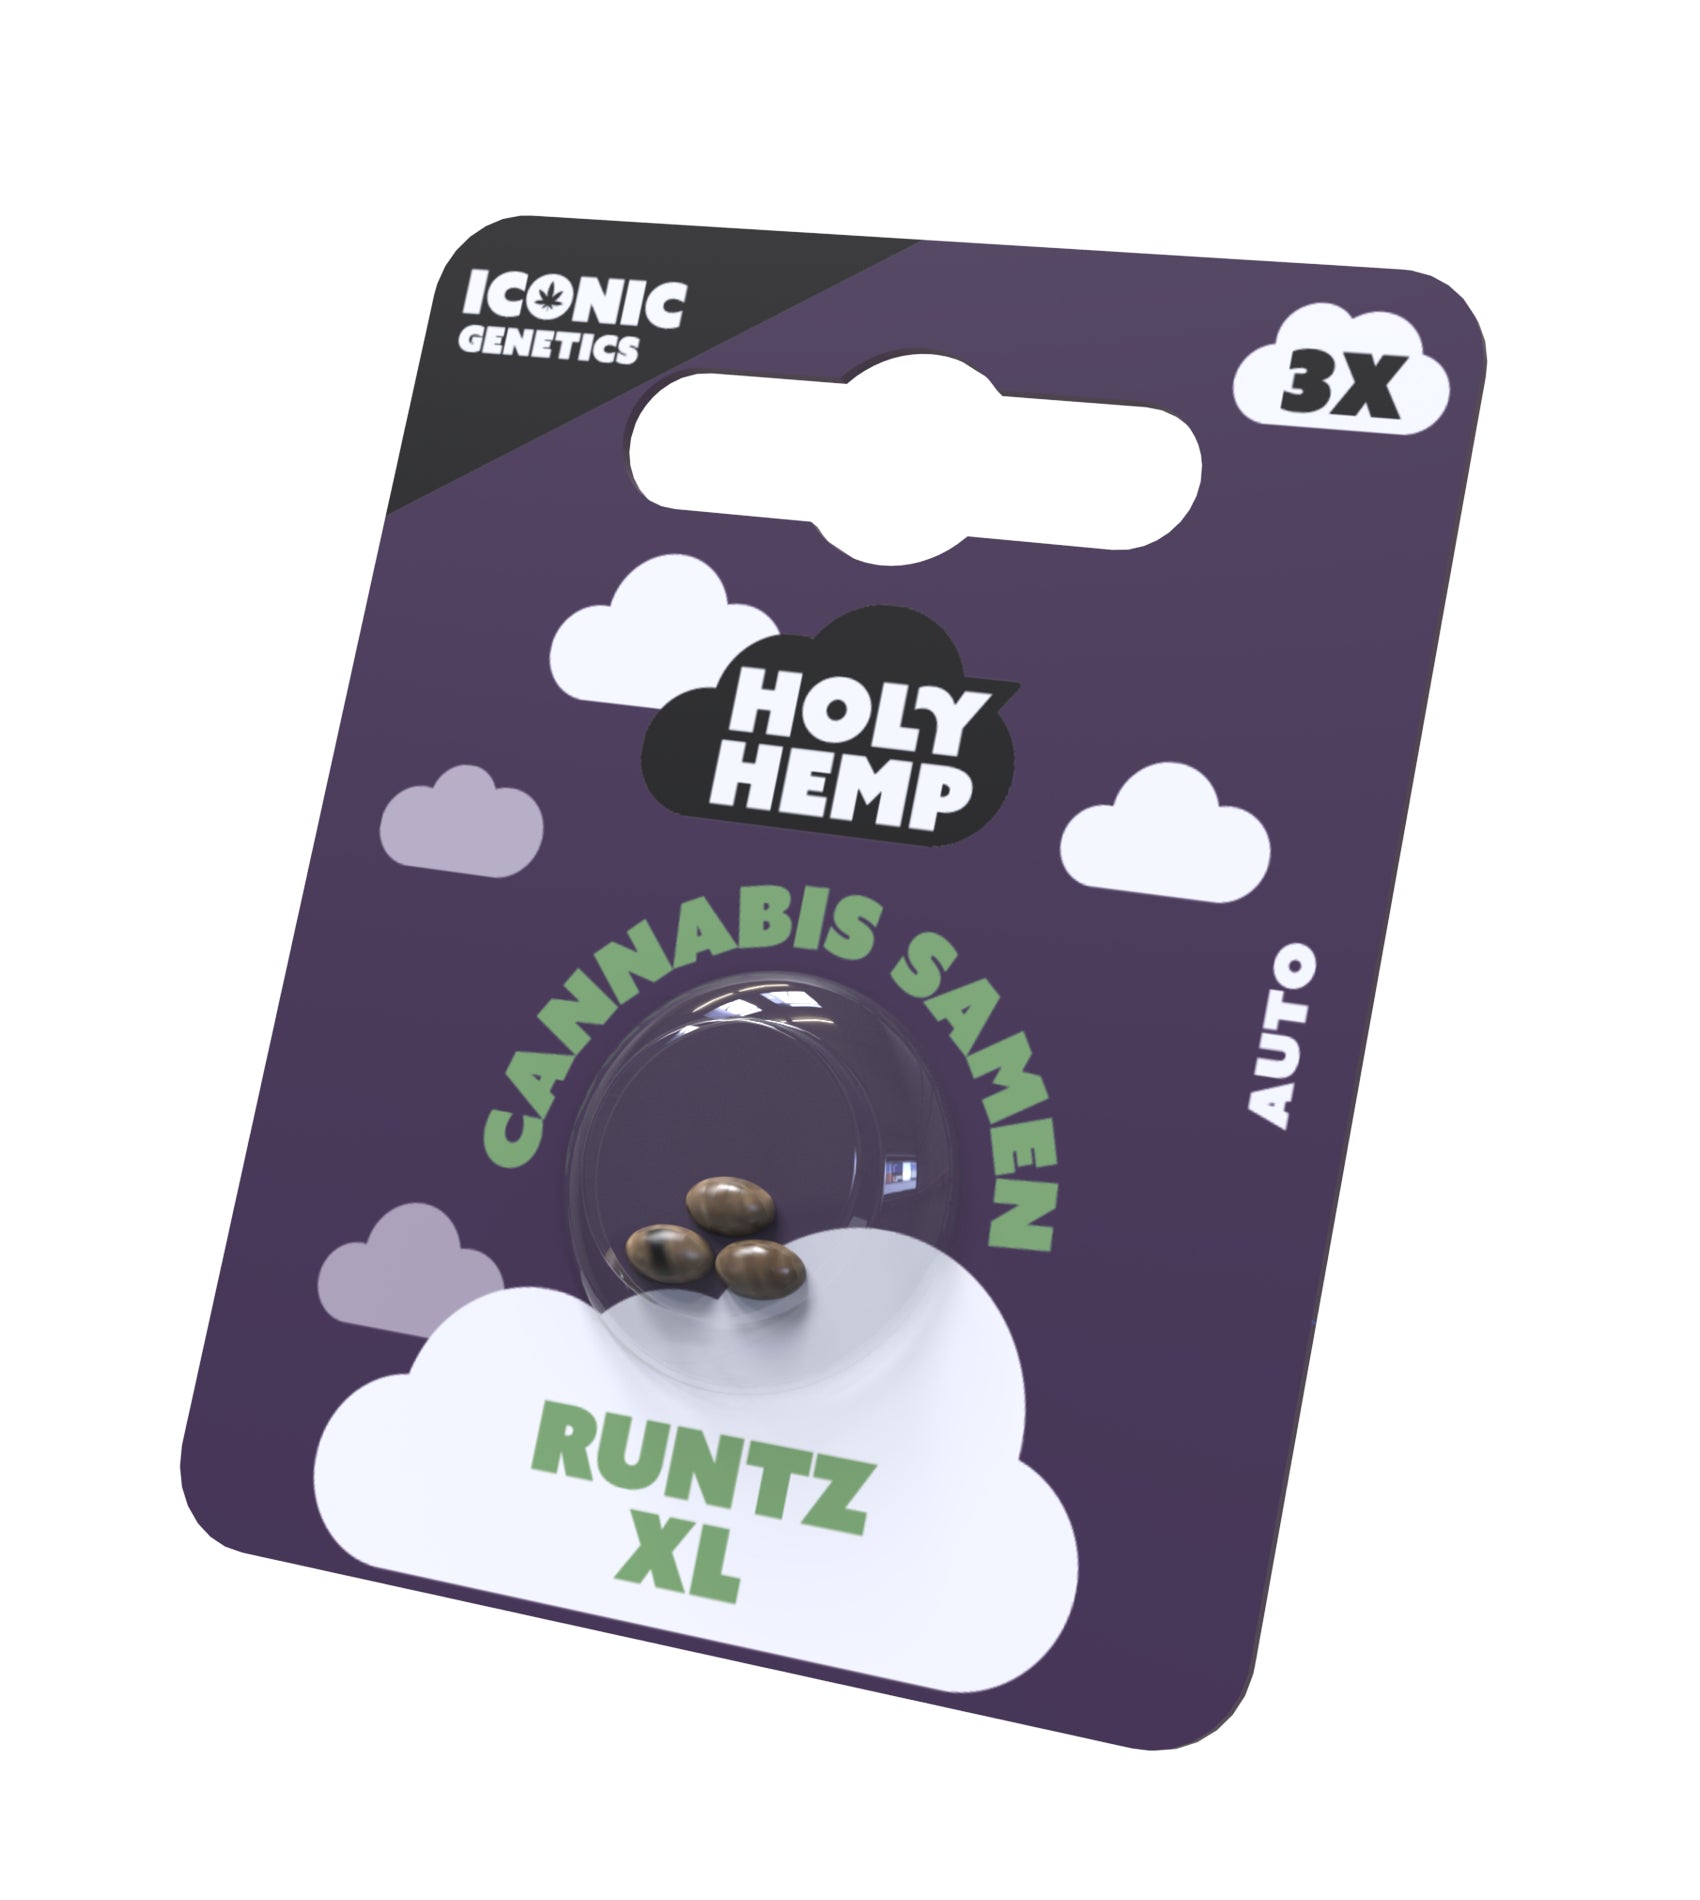 Runtz XL Cannabissamen - Iconic Seeds Holy Hemp